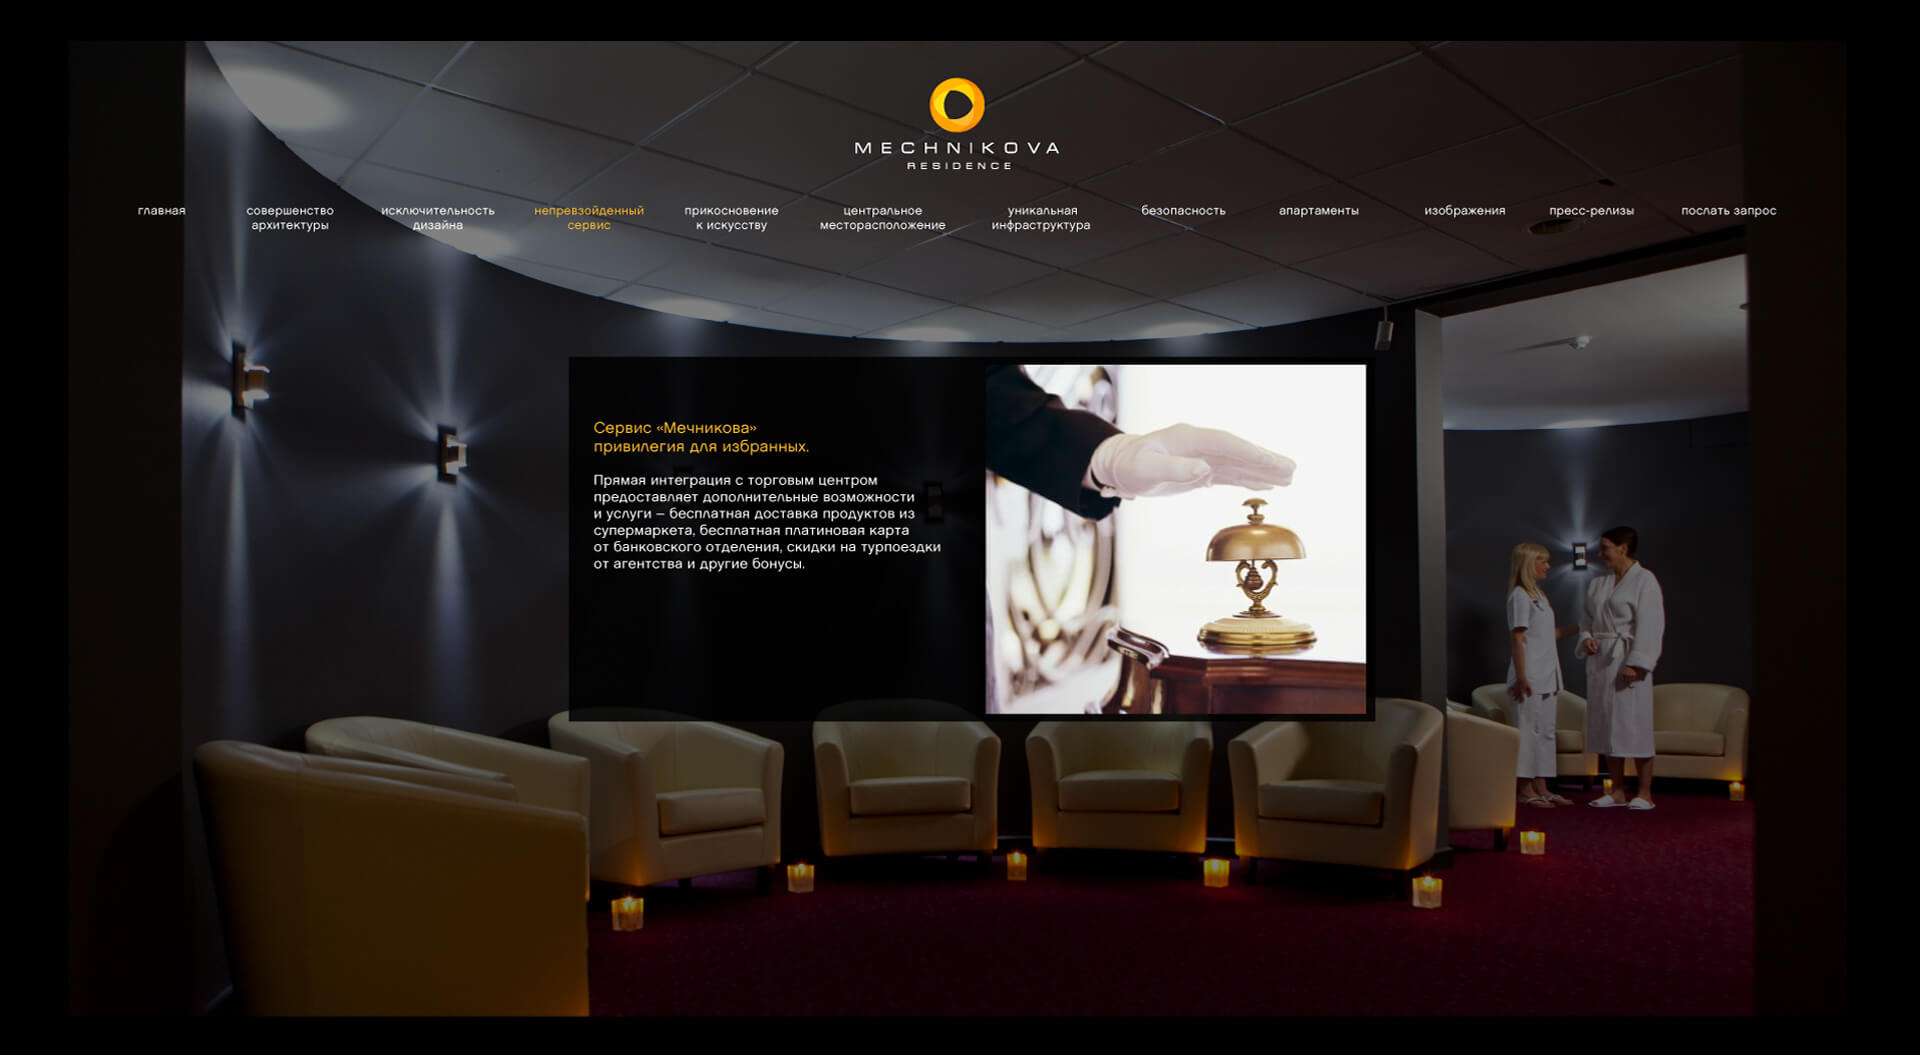 Residential luxury property branding, Mechnikova spa, website design for Continuum Ukraine